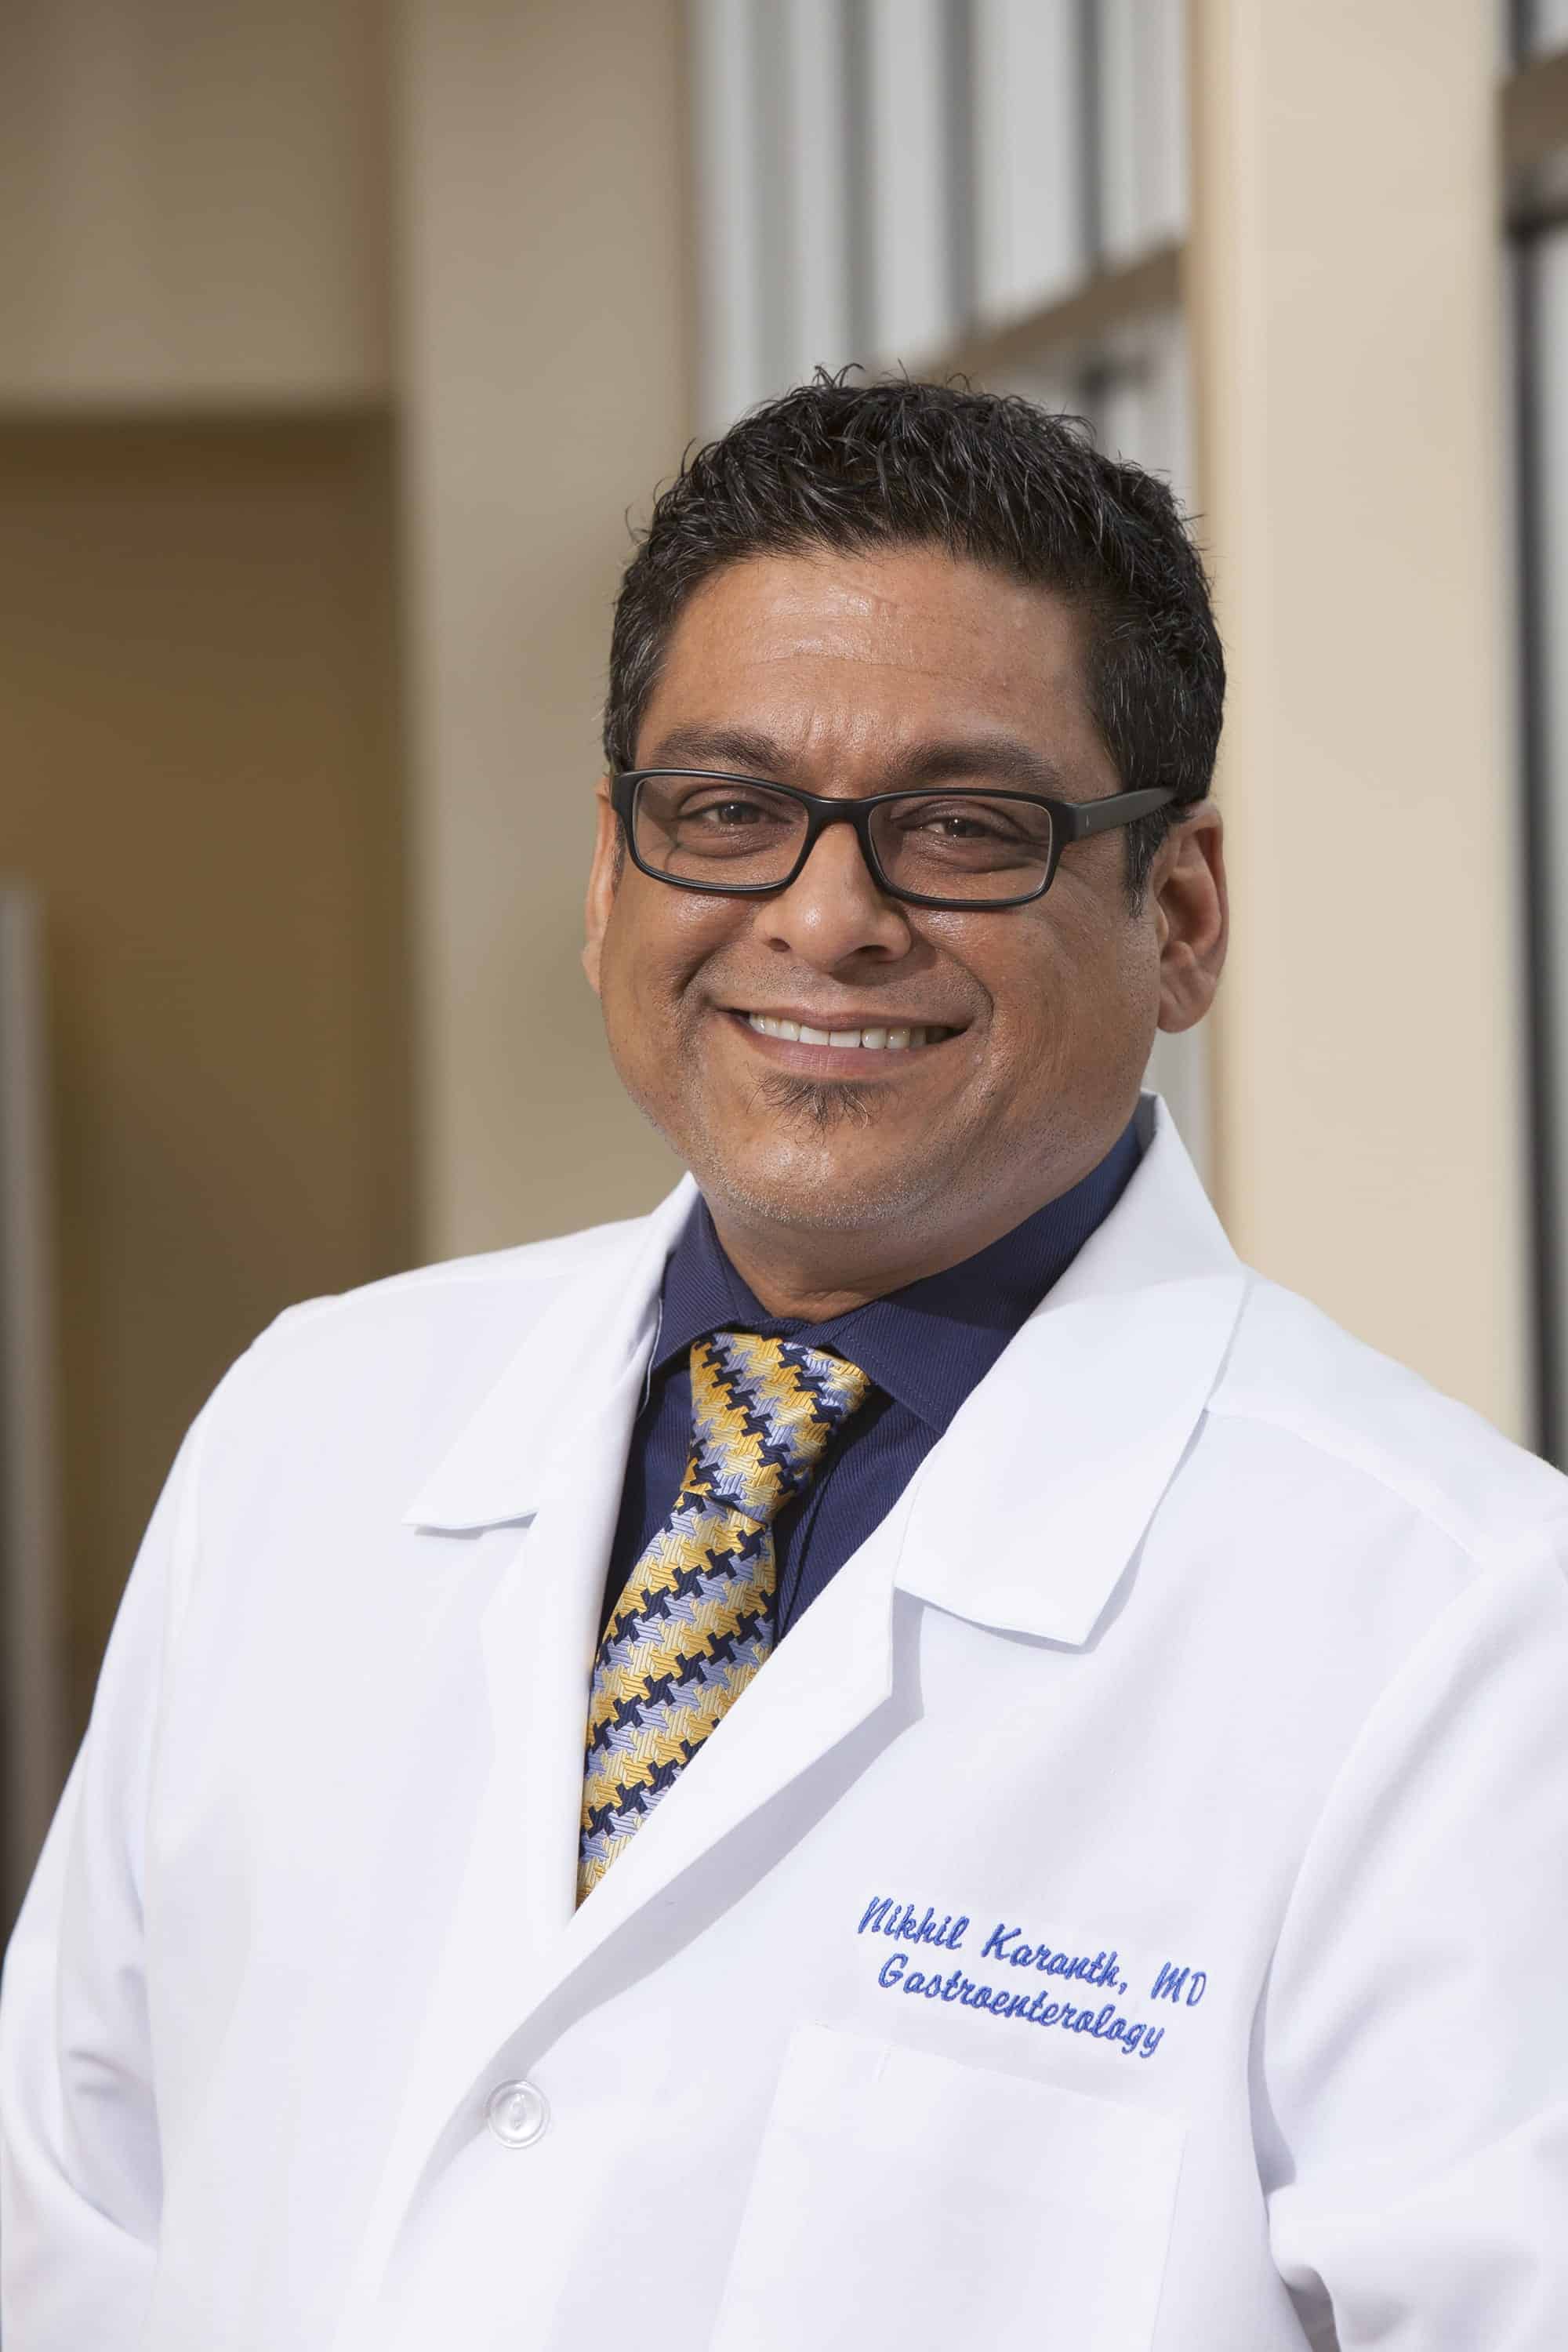 Nikhil Karanth, MD - Digestive Associates - gastroenterology and digestive  health